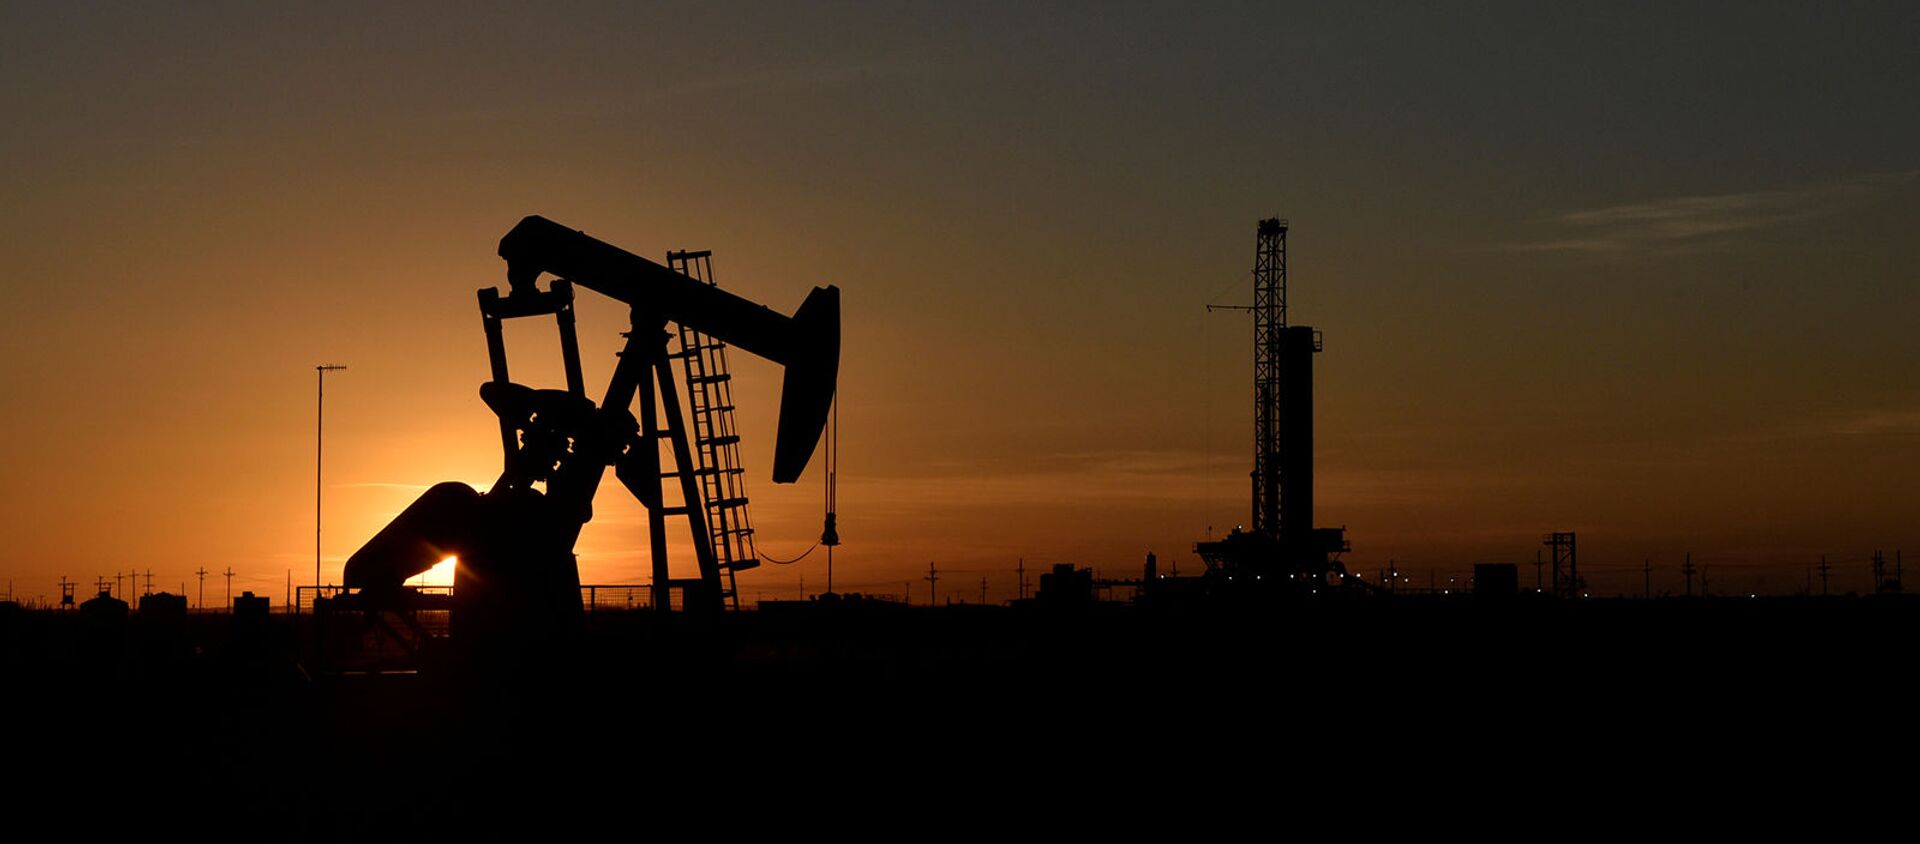 Месторождение нефти в Мидленде на закате (22 августа 2018). Техас - Sputnik Արմենիա, 1920, 10.04.2020